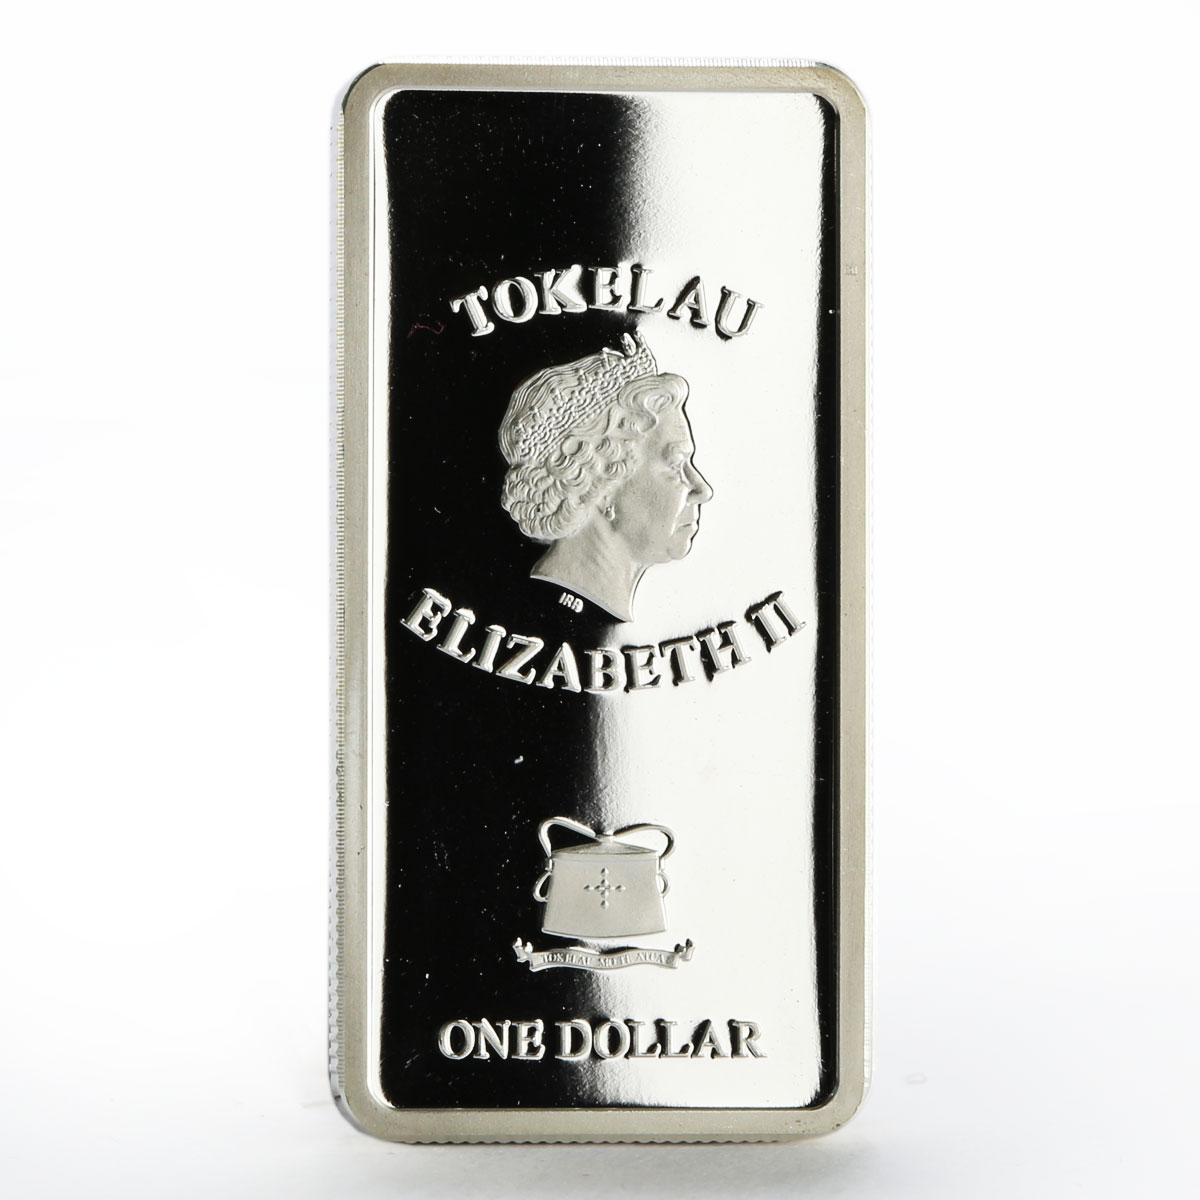 Tokelau 1 dollar Hans Memling The Last Judgement Art proof silver coin 2013